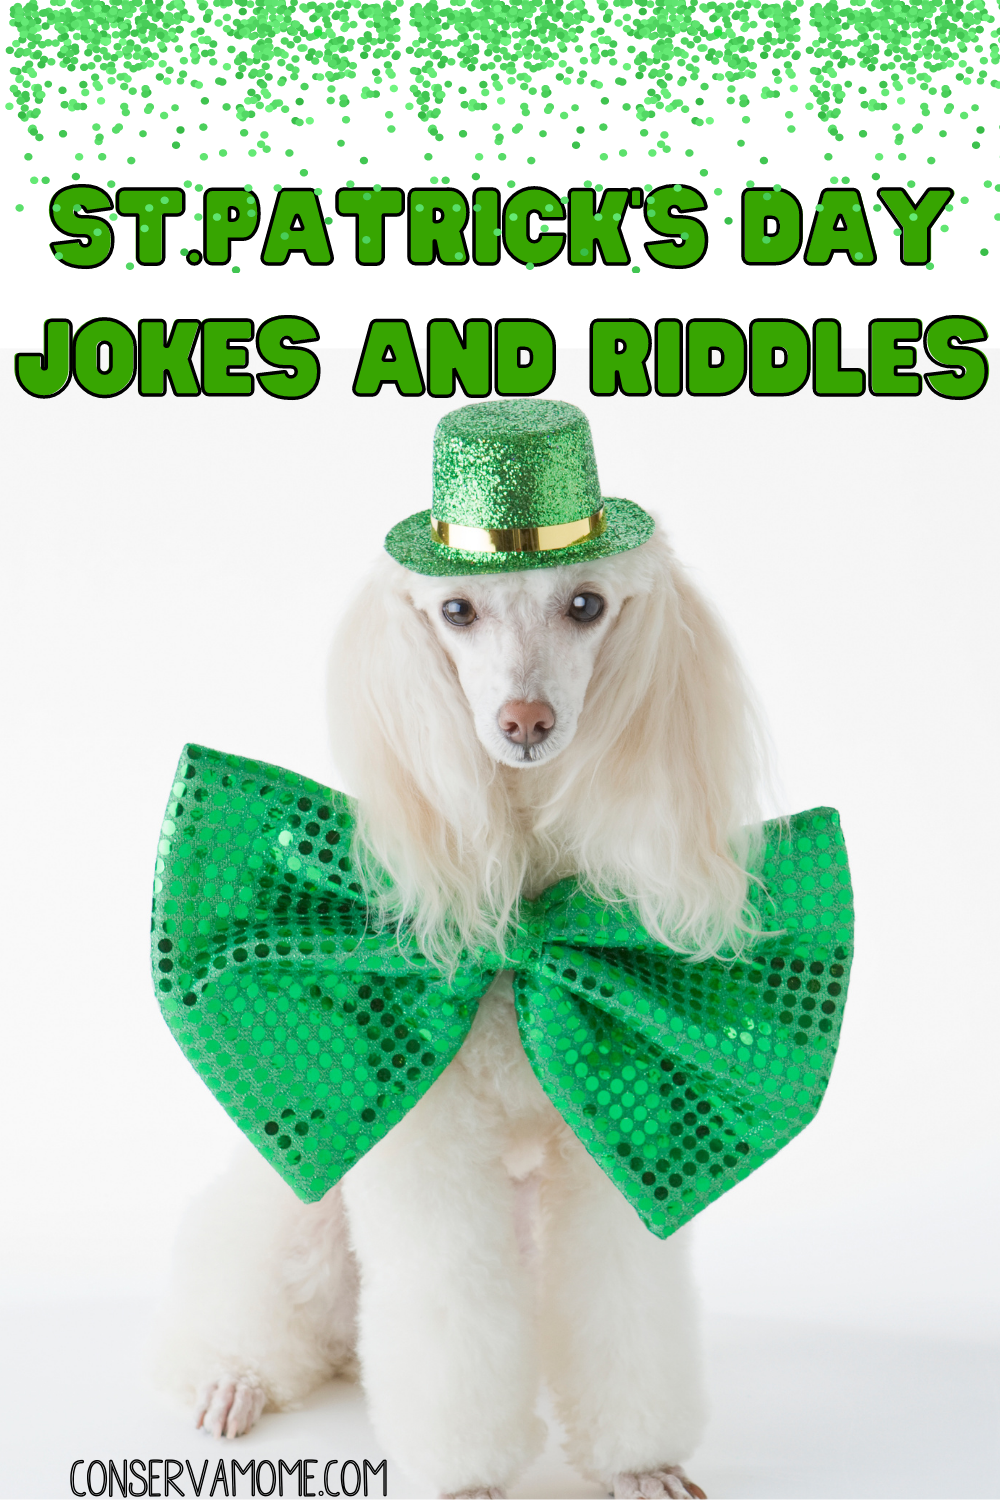 St.Patrick's Day Jokes